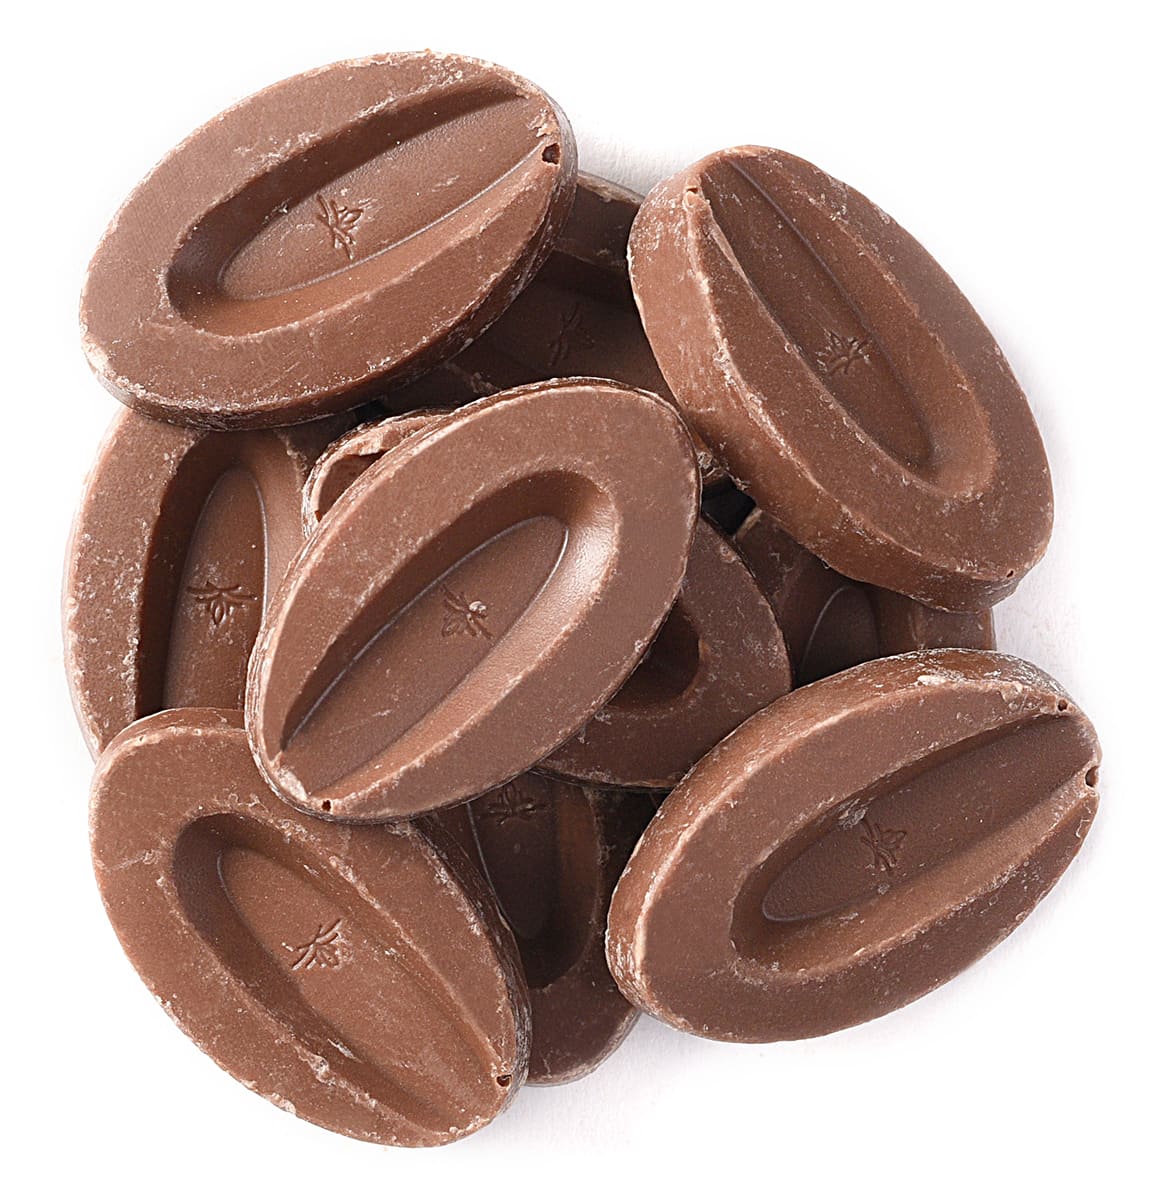 Chocolat patissier de la marque VALRHONA paquet de 3 kg.